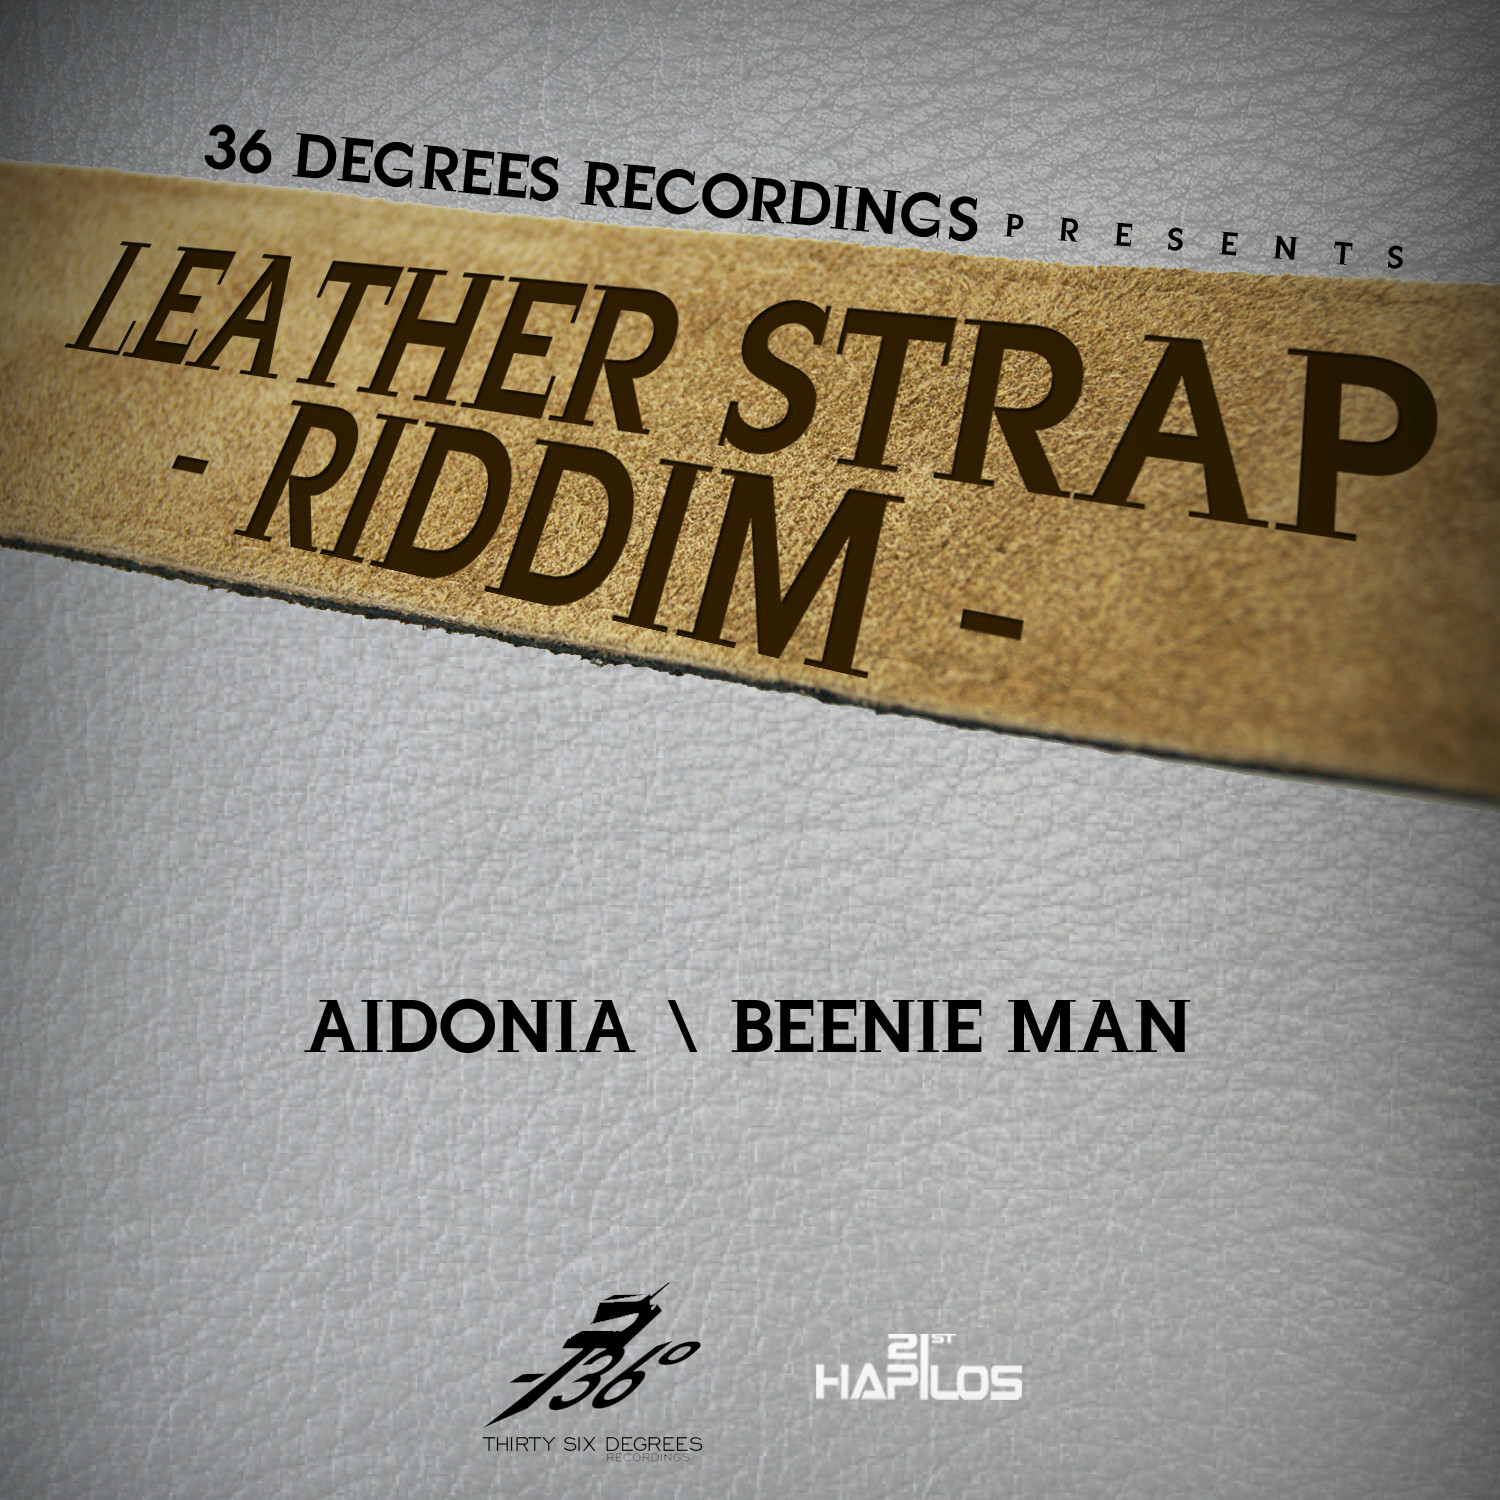 Leather Strap Riddim